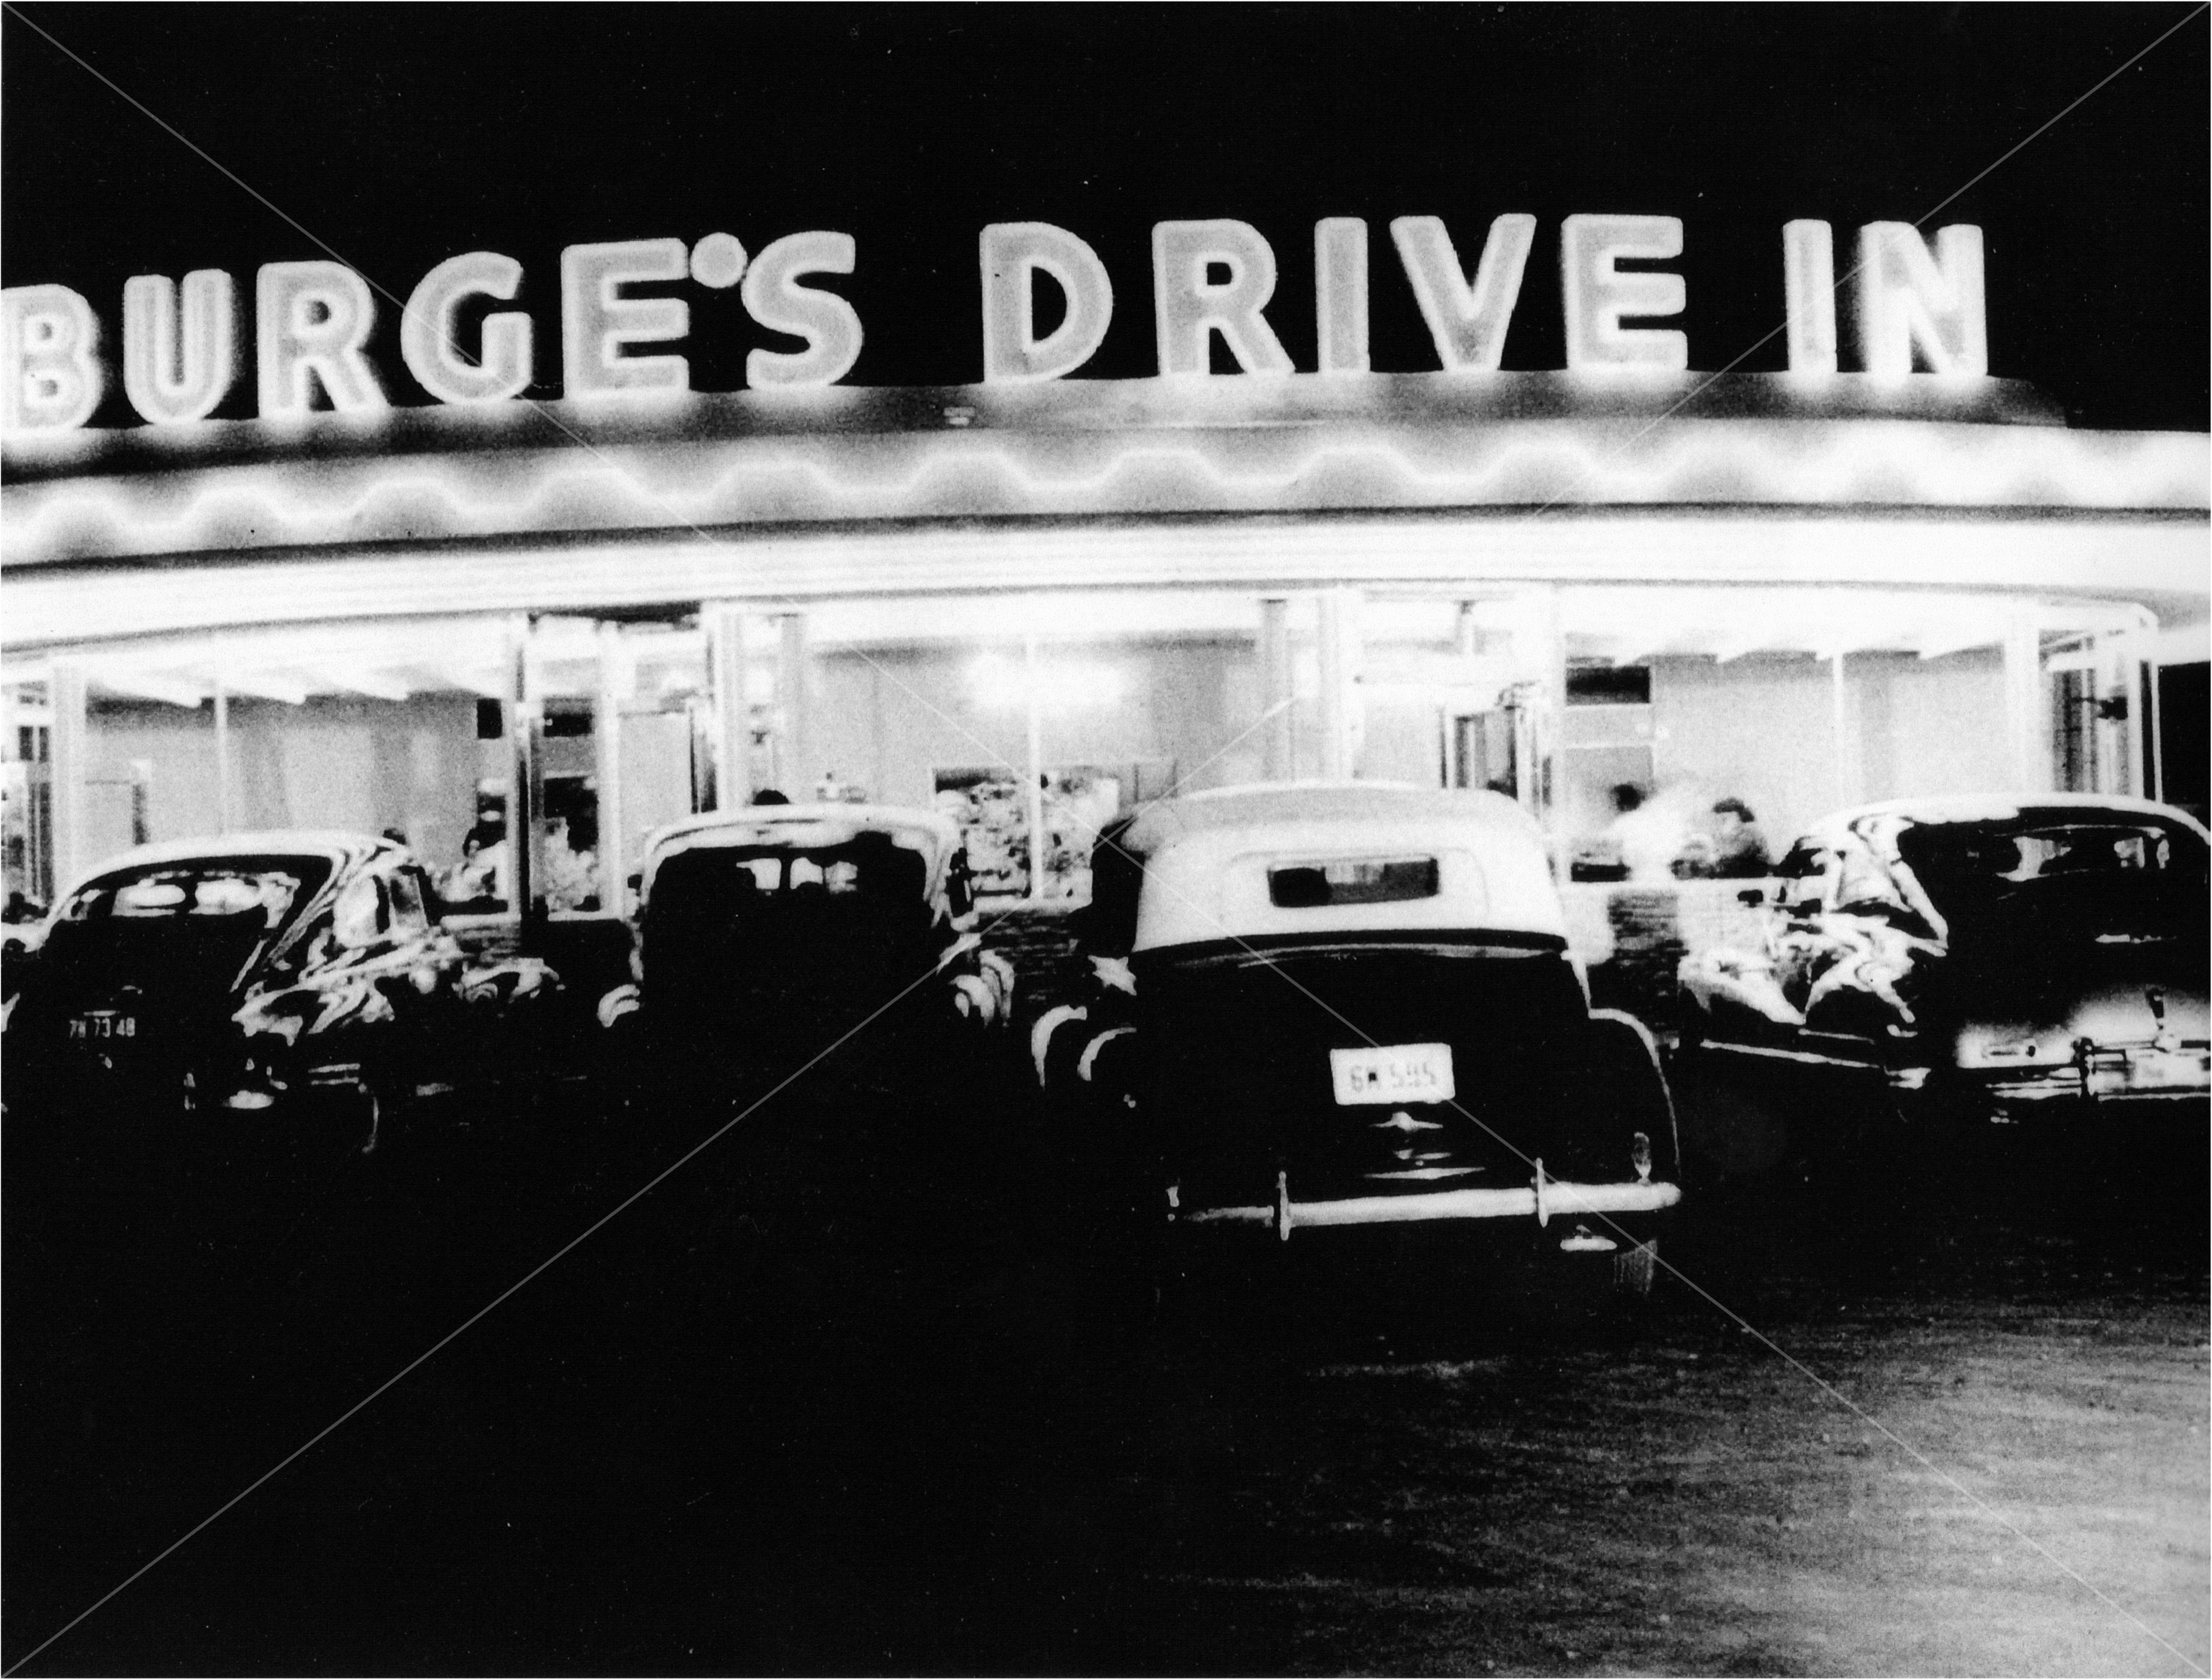 Burge's drive-in